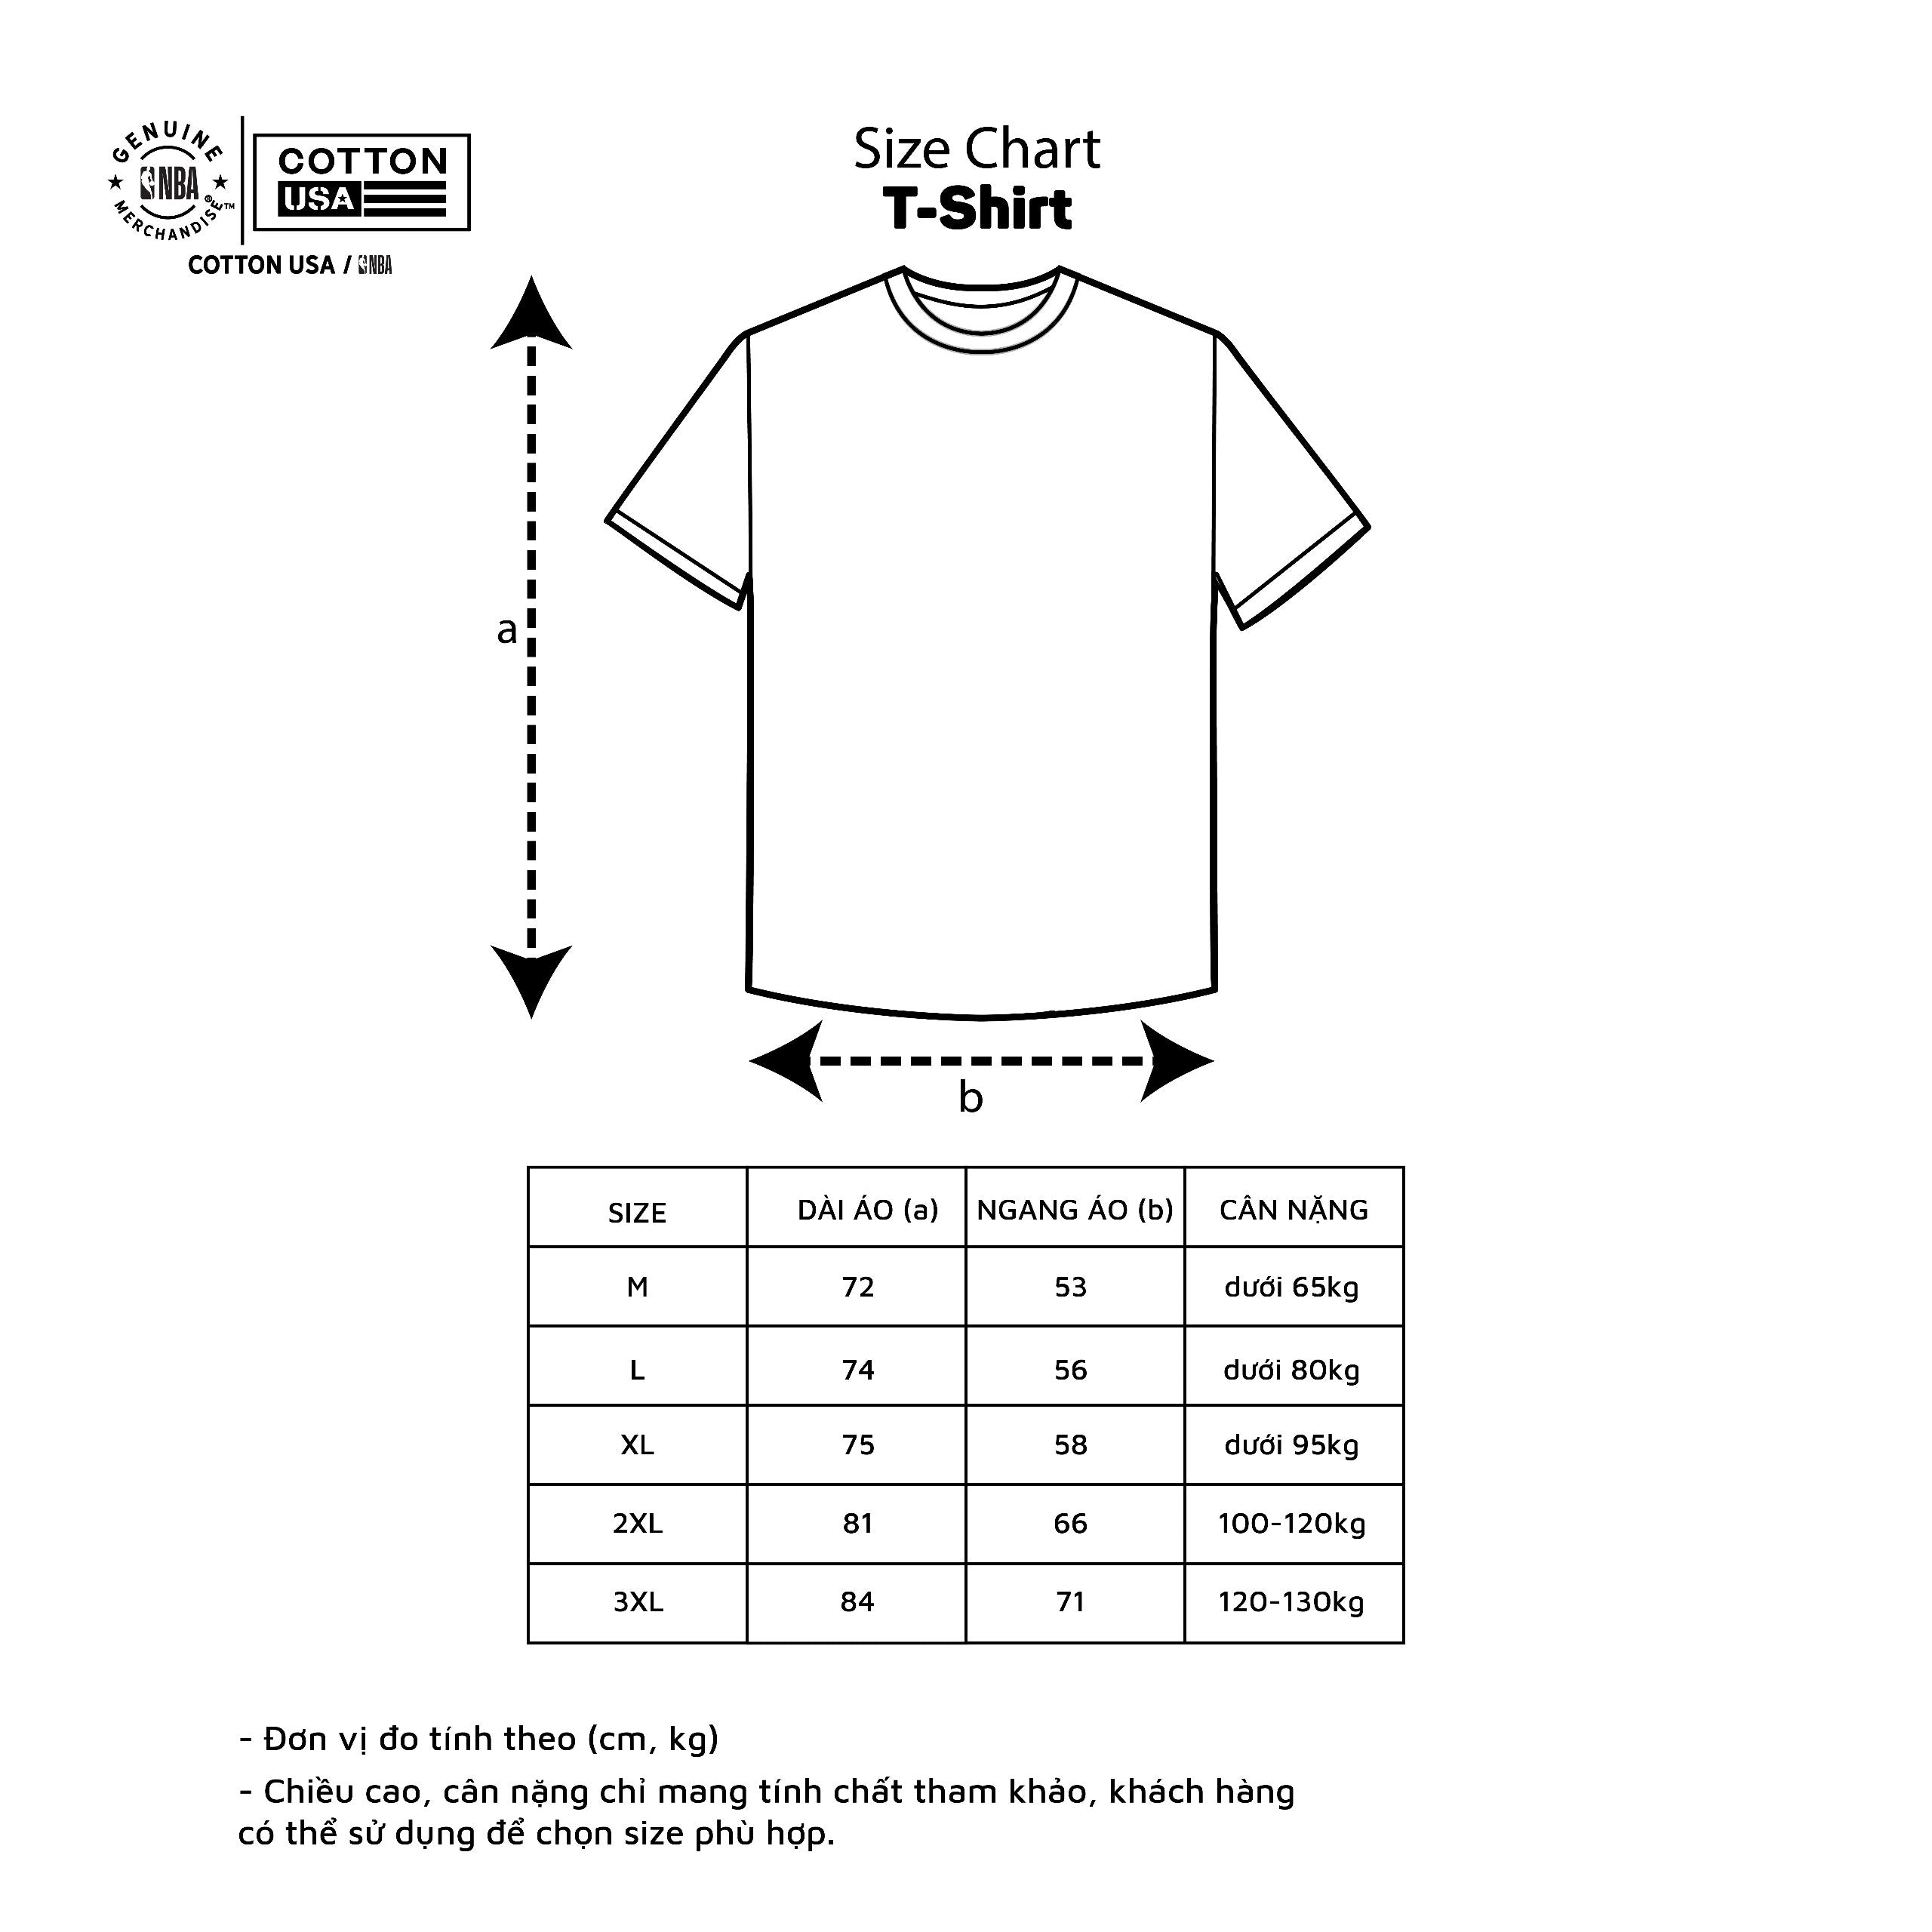 NBA Mitchell & Ness Mens 1998 T-Shirt